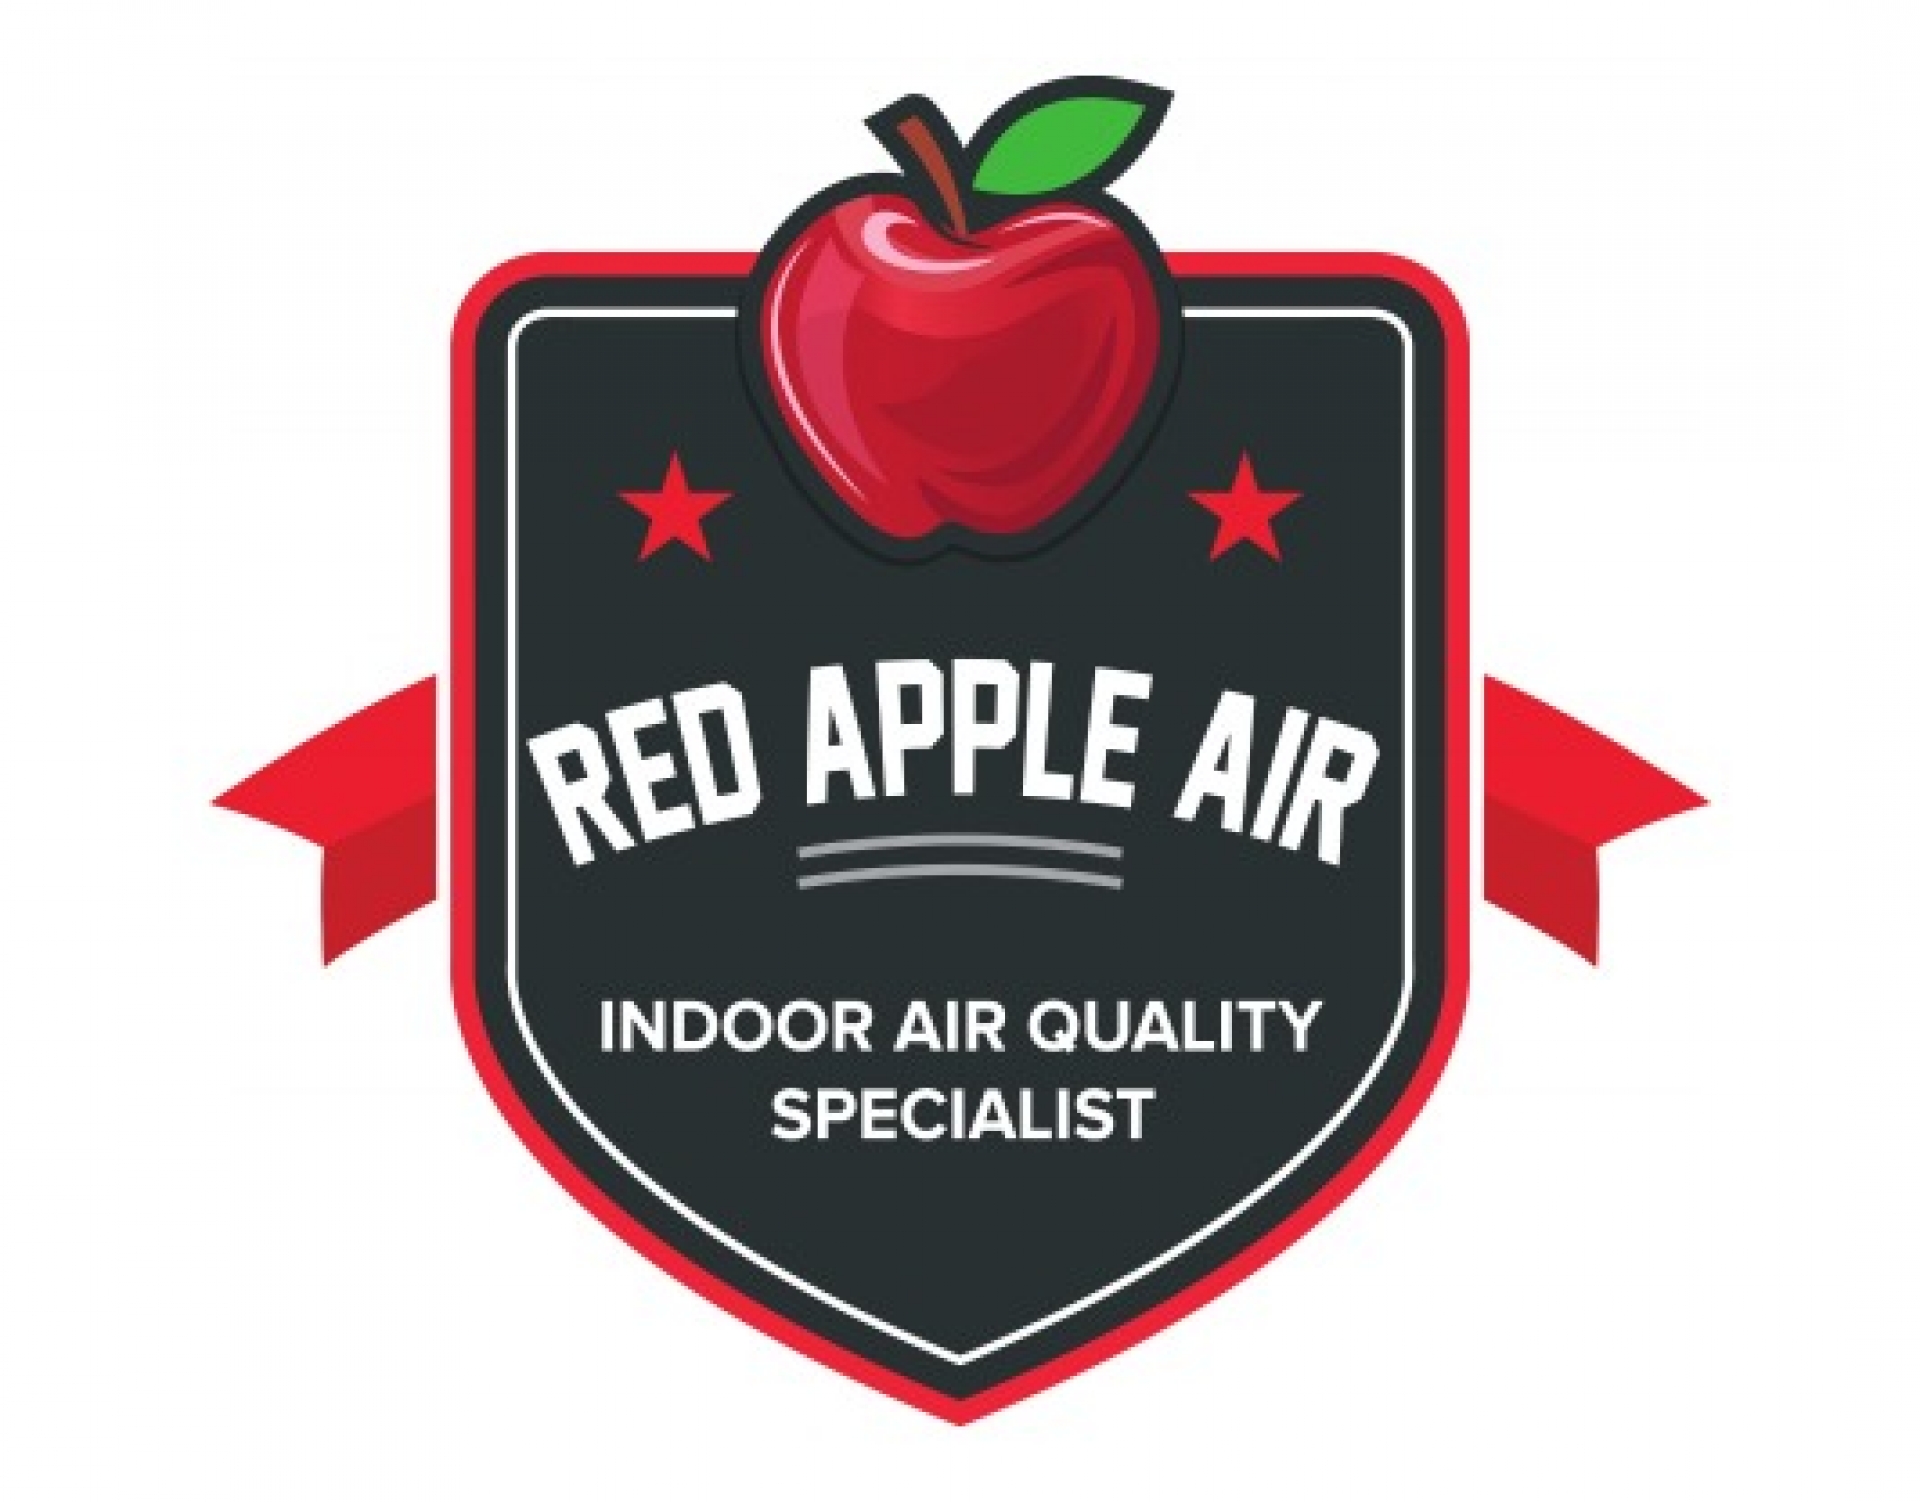 Red Apple Air logo